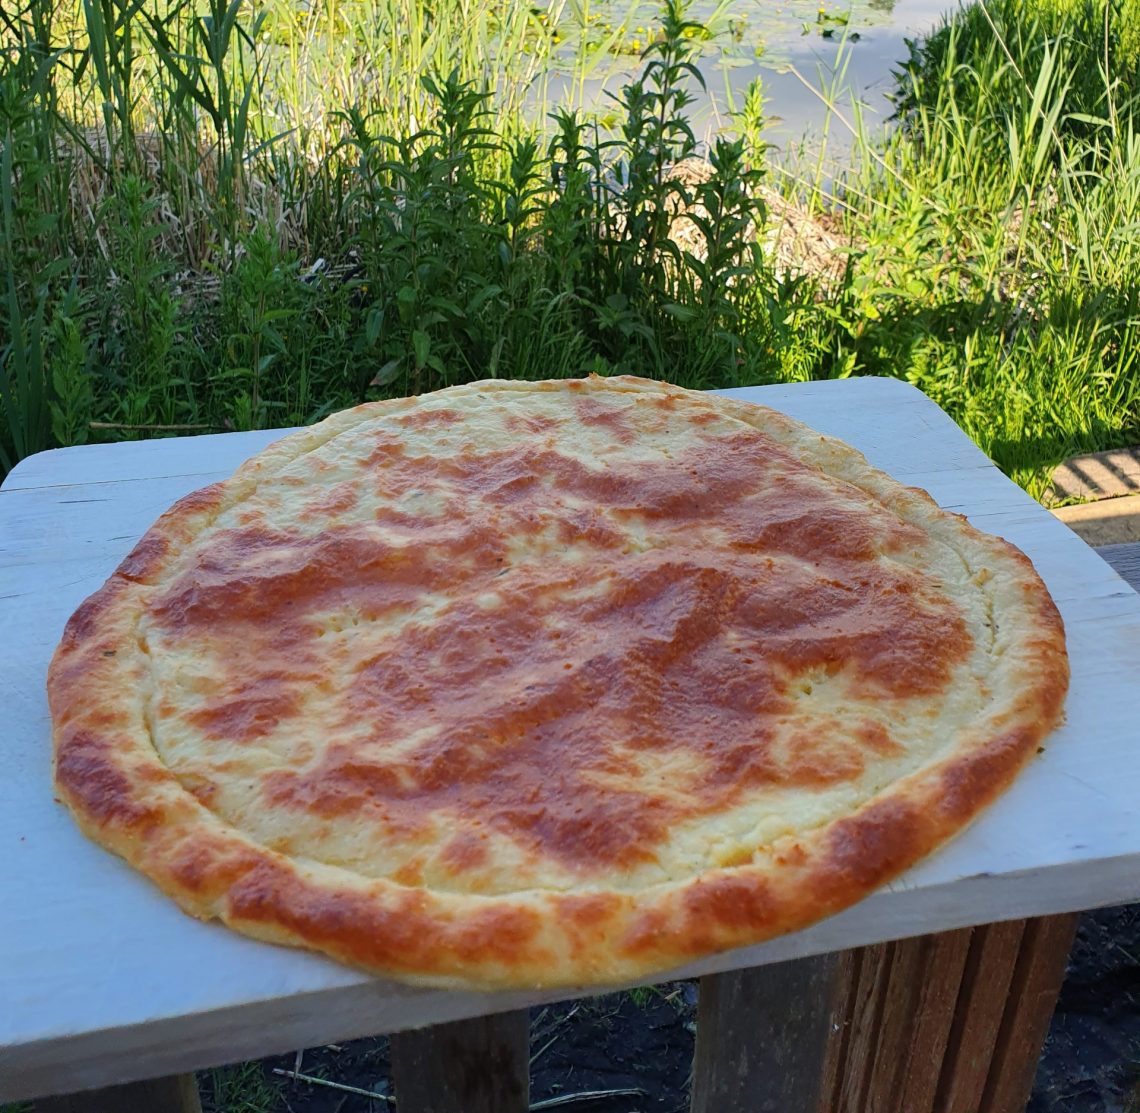 Keto Pizza | Triple Cheese